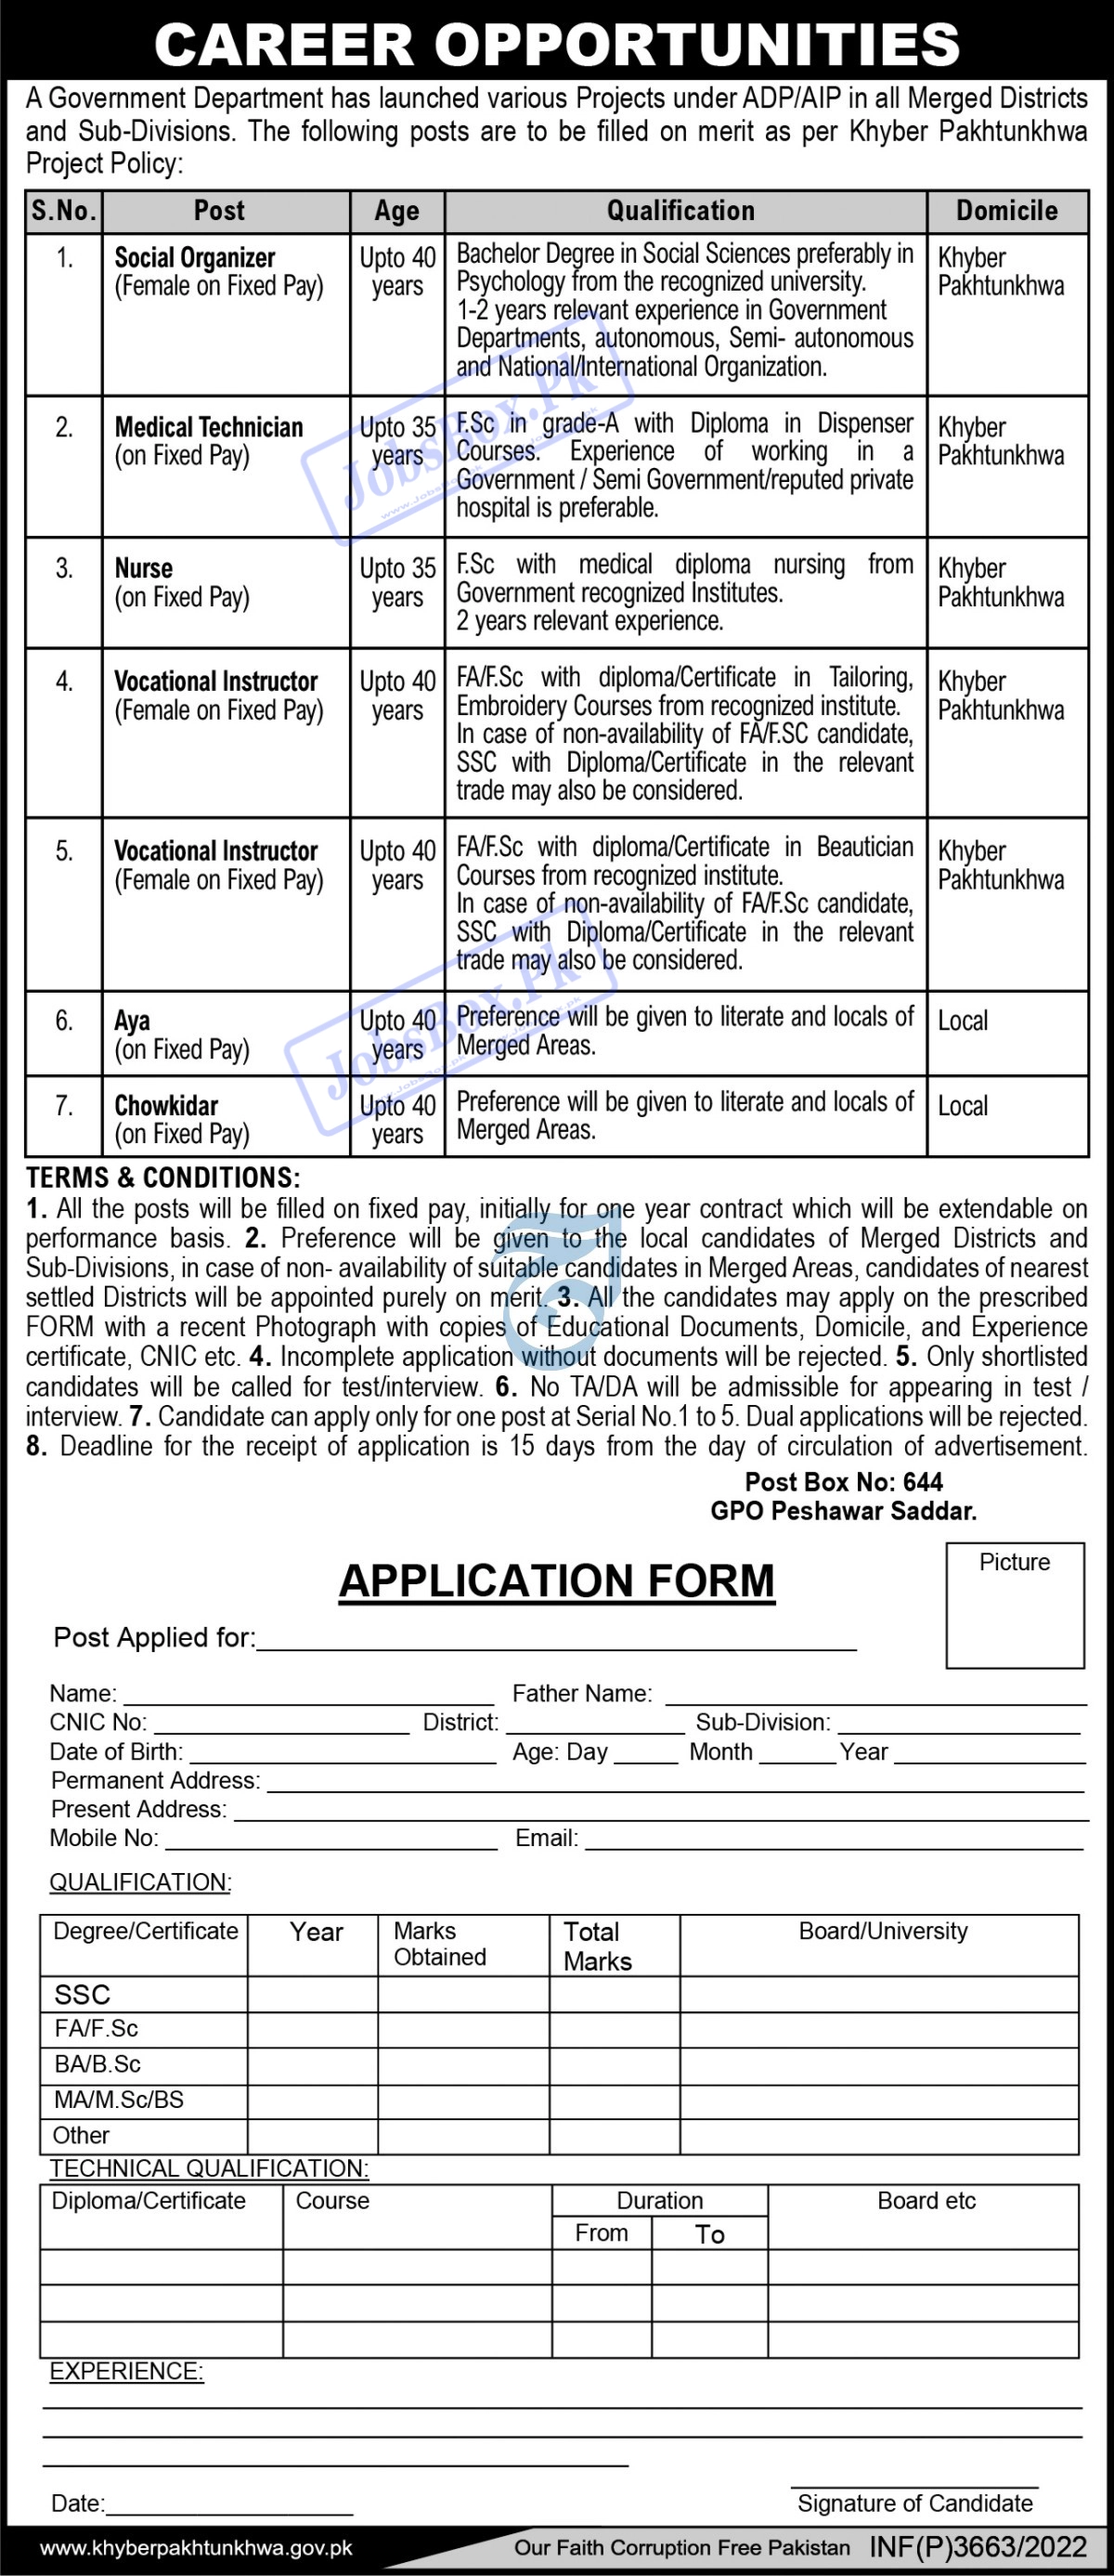 New Government Department KPK PO Box 644 Peshawar Jobs 2022 Ad